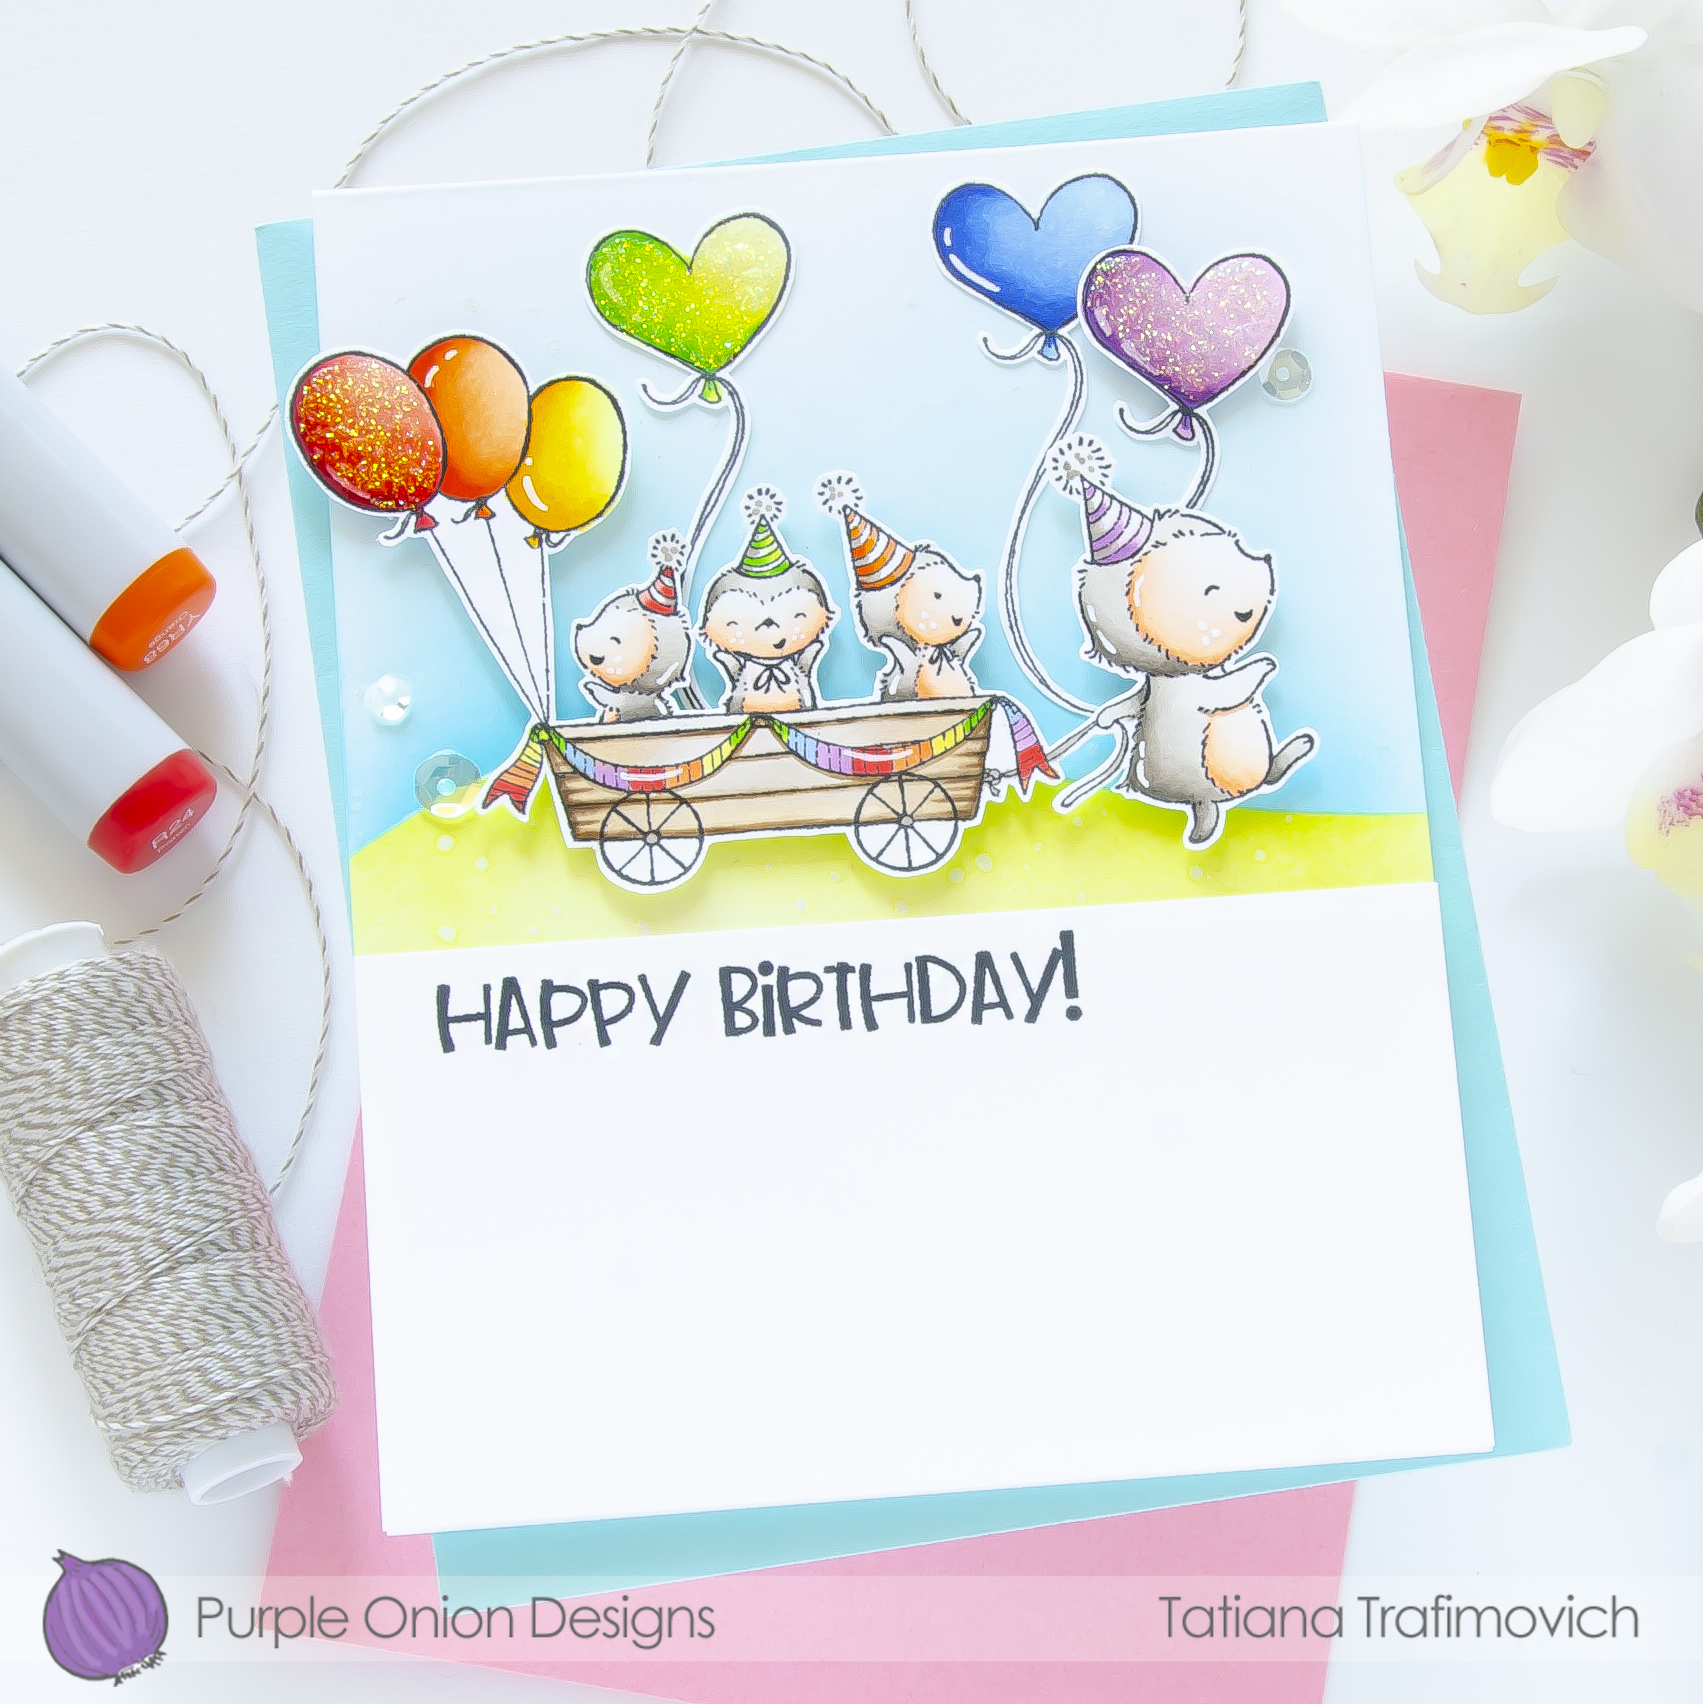 Happy Birthday #handmade card by Tatiana Trafimovich #tatianacraftandart - stamps by Purple Onion Designs